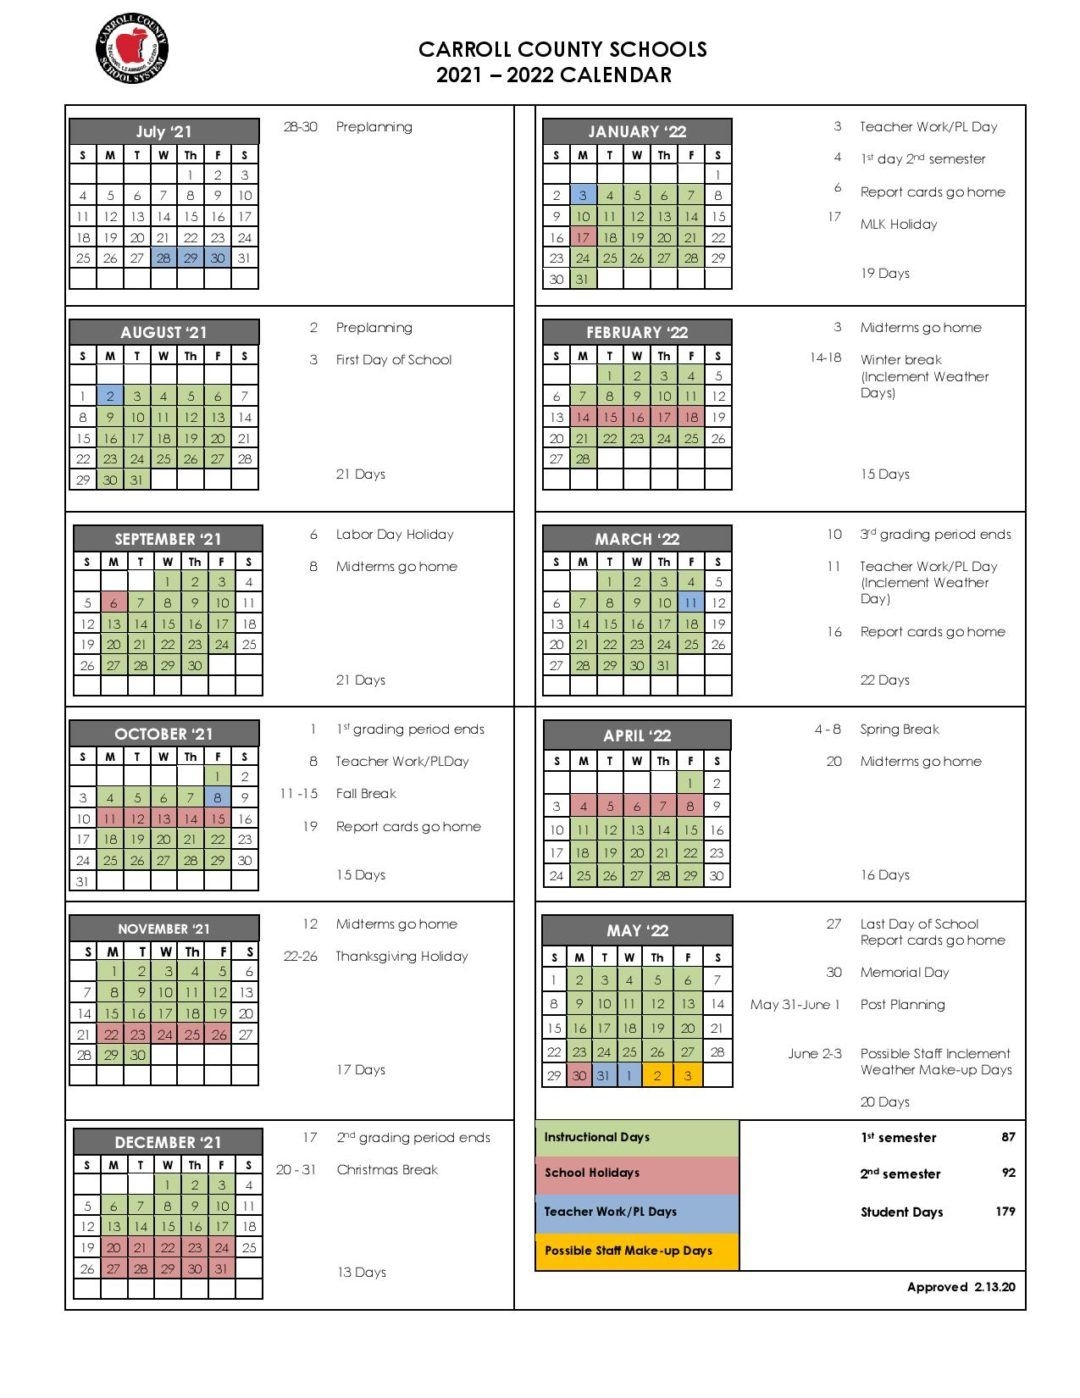 Carroll County Schools Calendar 2021-2022 In Pdf